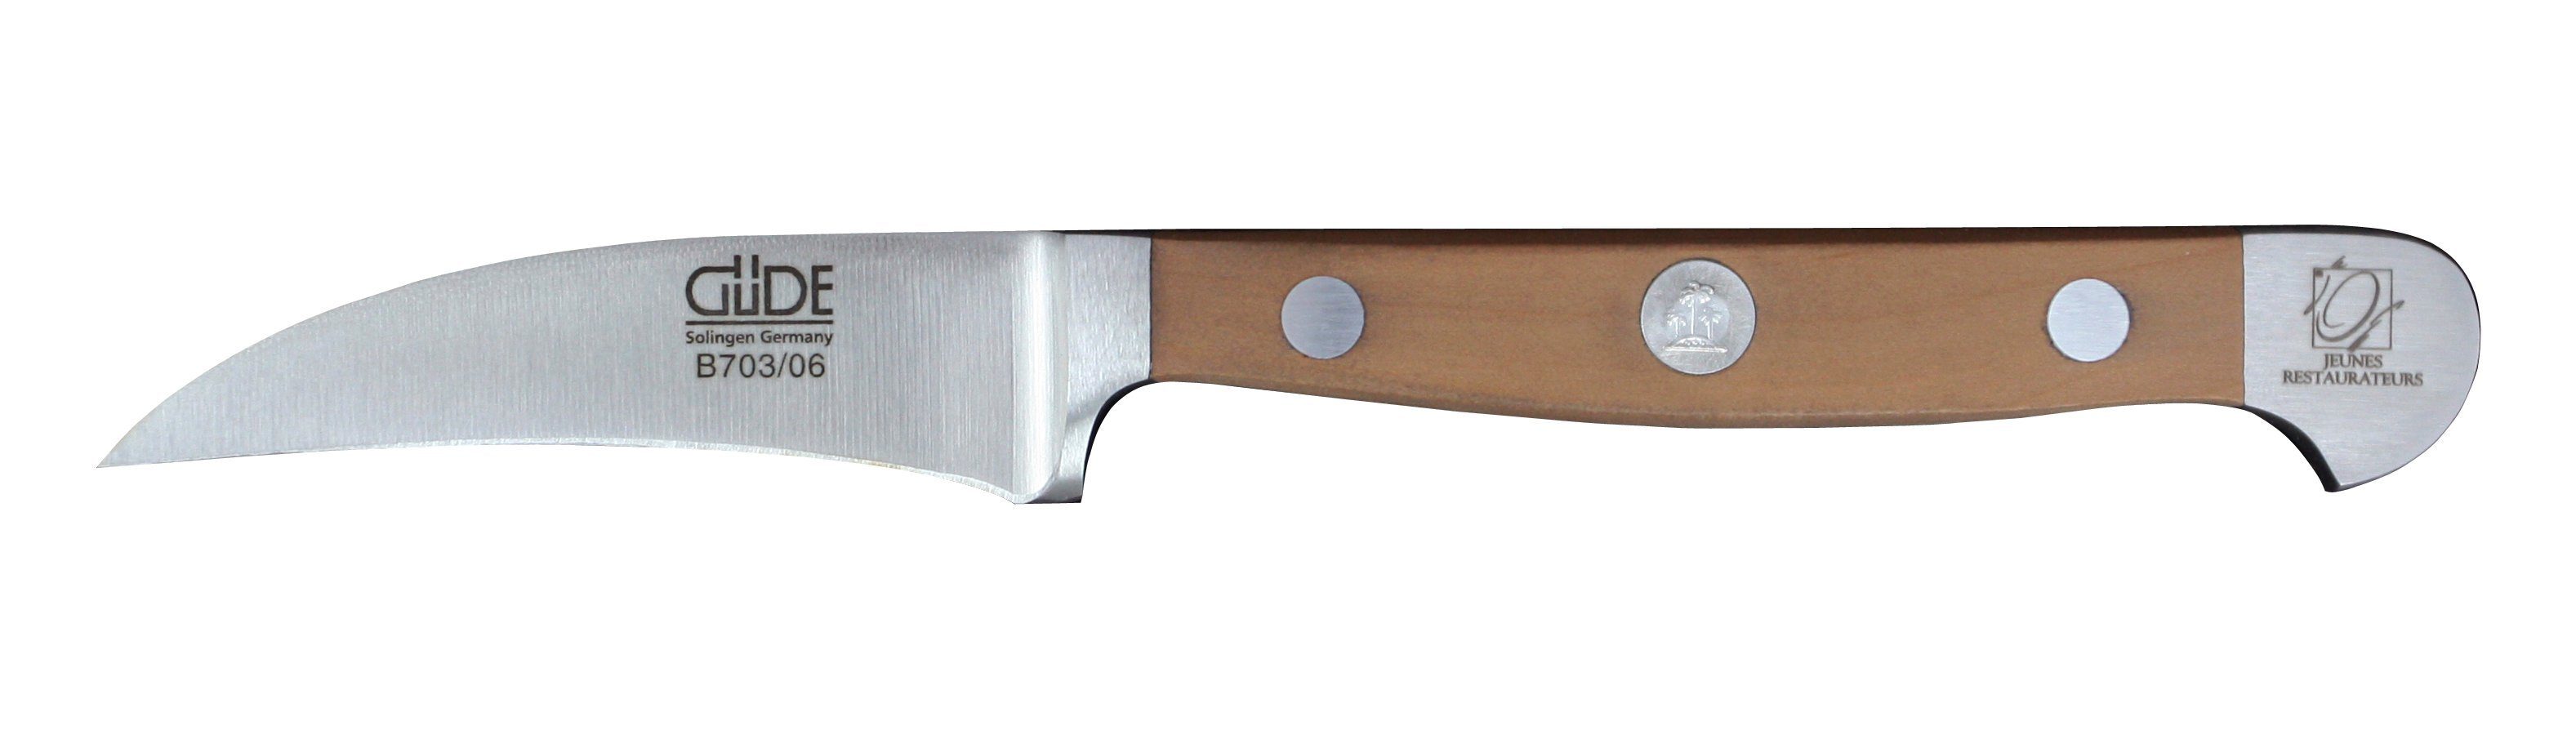 Güde Messer Solingen Schale Alpha Birne, Messerstahl, Schälmesser 6 cm - CVM-Messerstahl - Griffschalen Birnenholz | Obstmesser